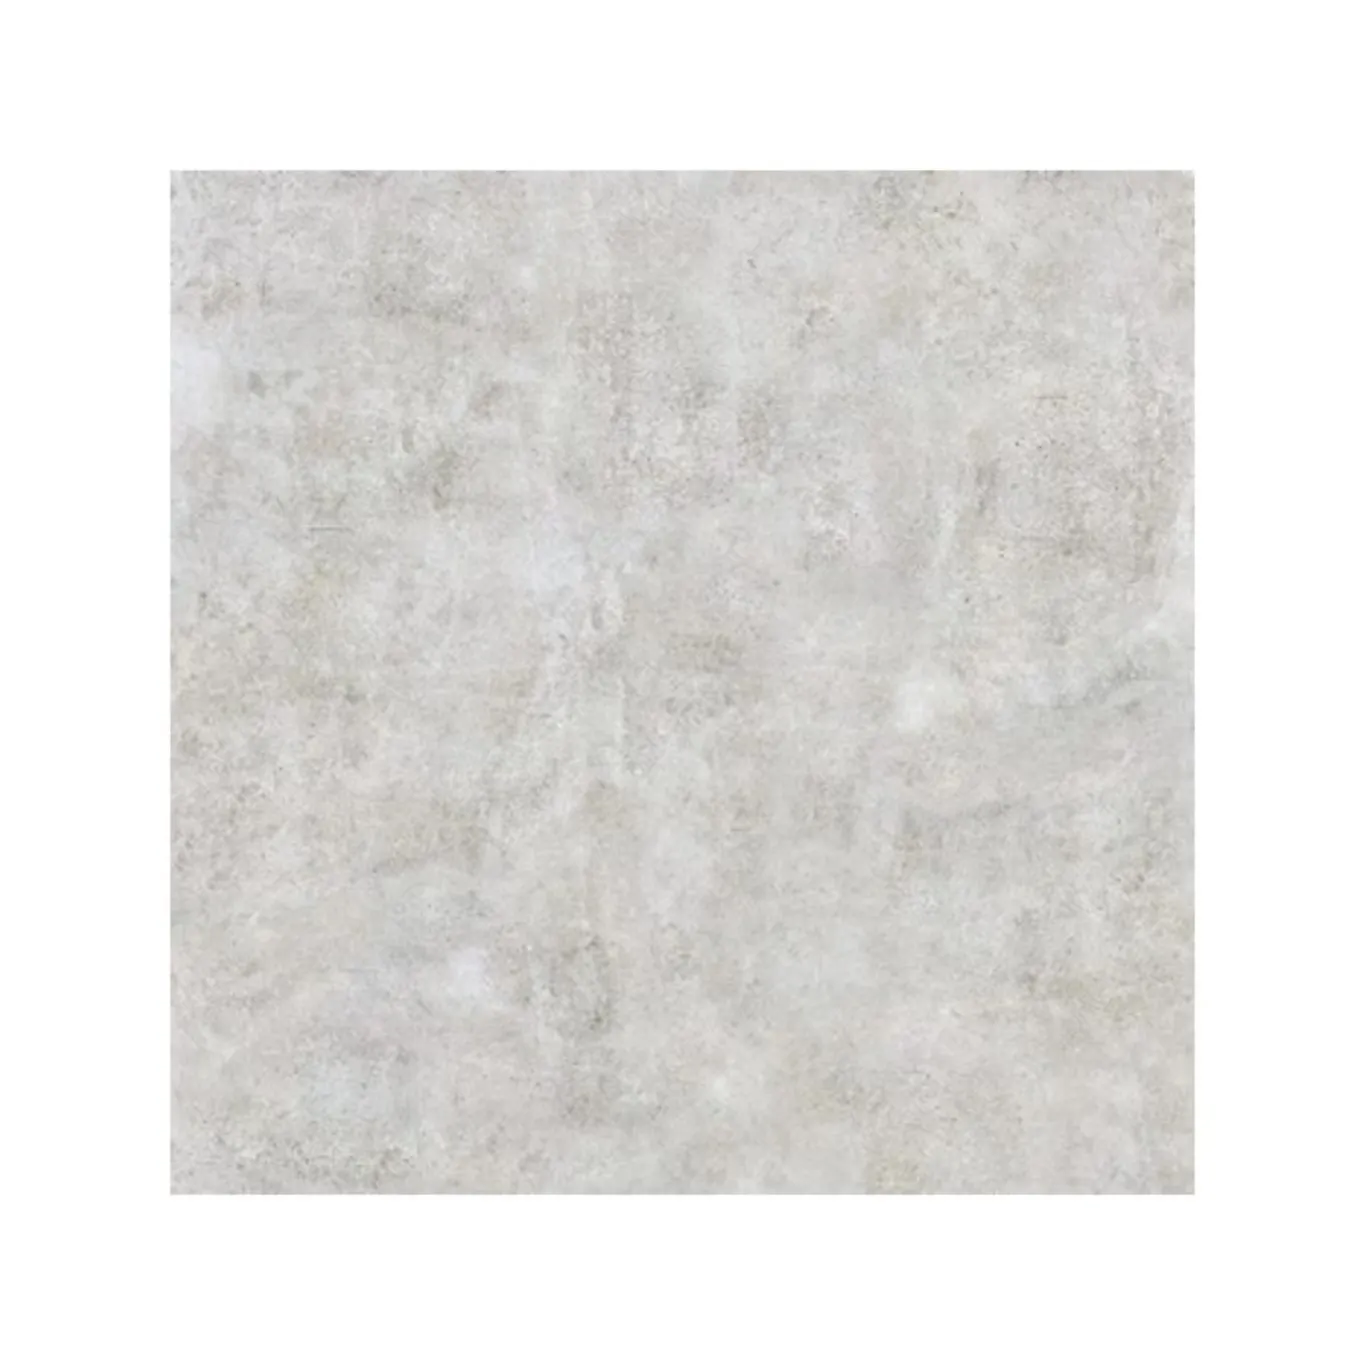 Made In China Non Slip Granites Look Rustic For Bathroom Kitchen Floor Porcelain Tile